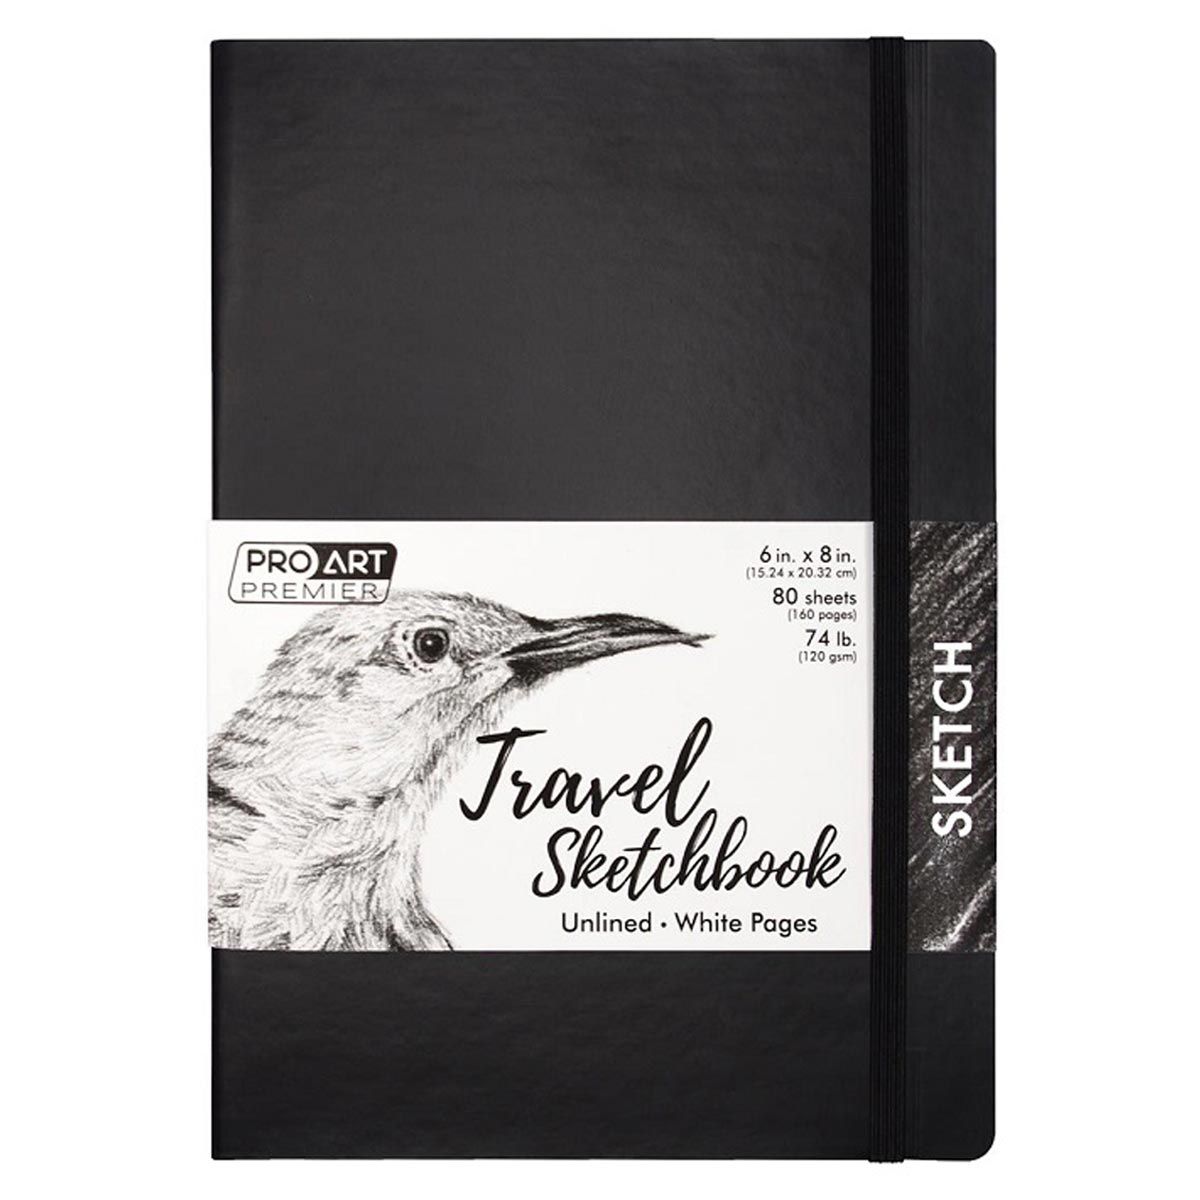 Pro Art Premier Travel Sketchbook 6in x 8in Black